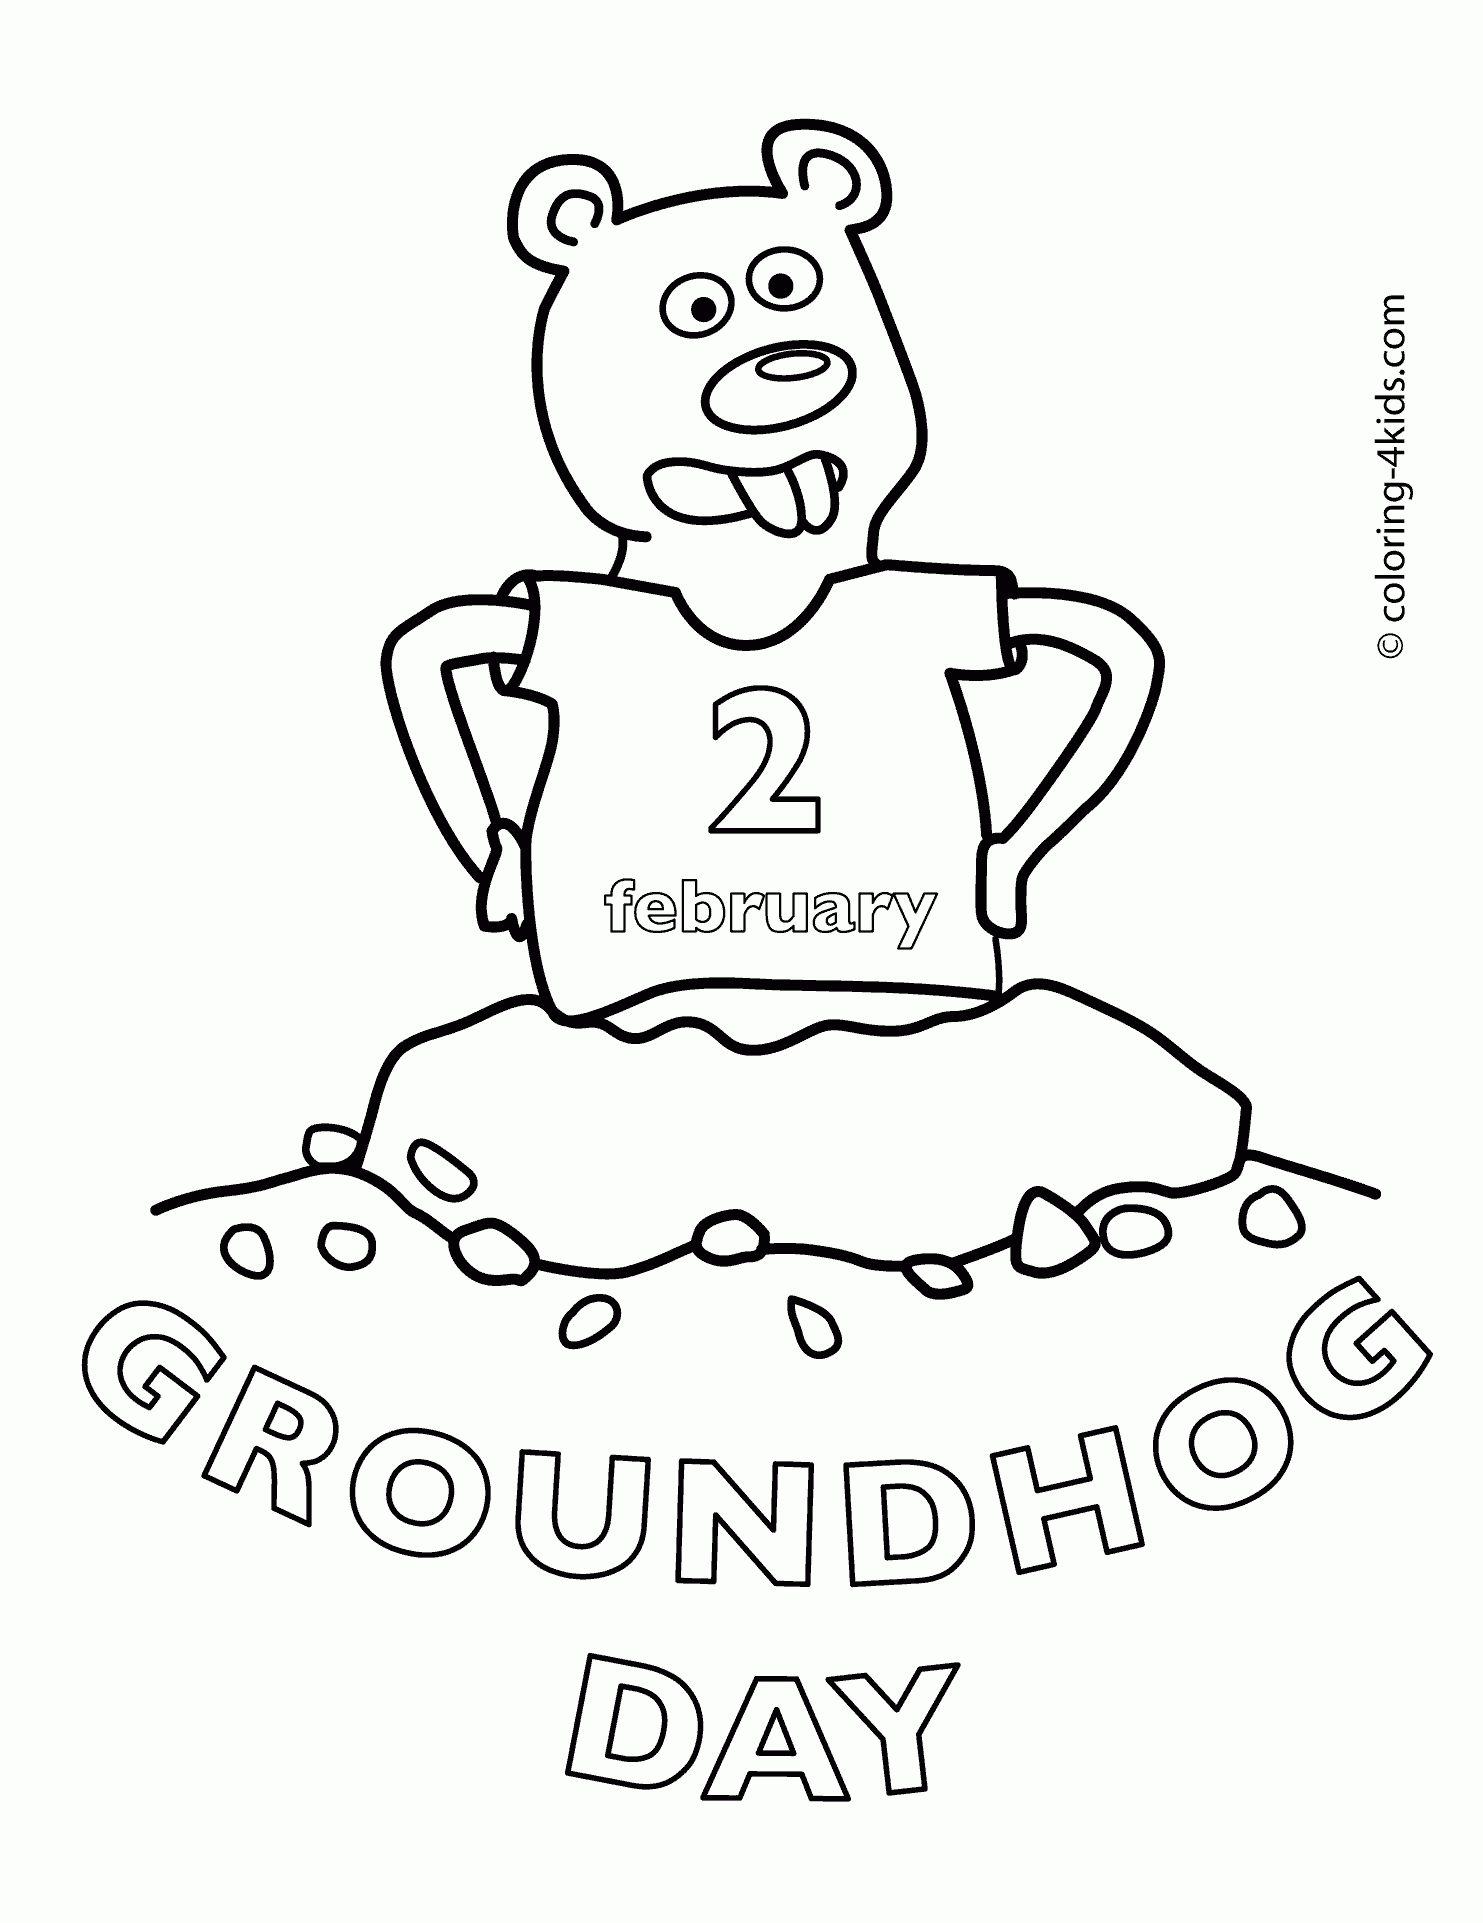 Groundhog Coloring Page Happy Groundhog Day Coloring Pages For Kids - Groundhog Day Coloring Pages Free Printable